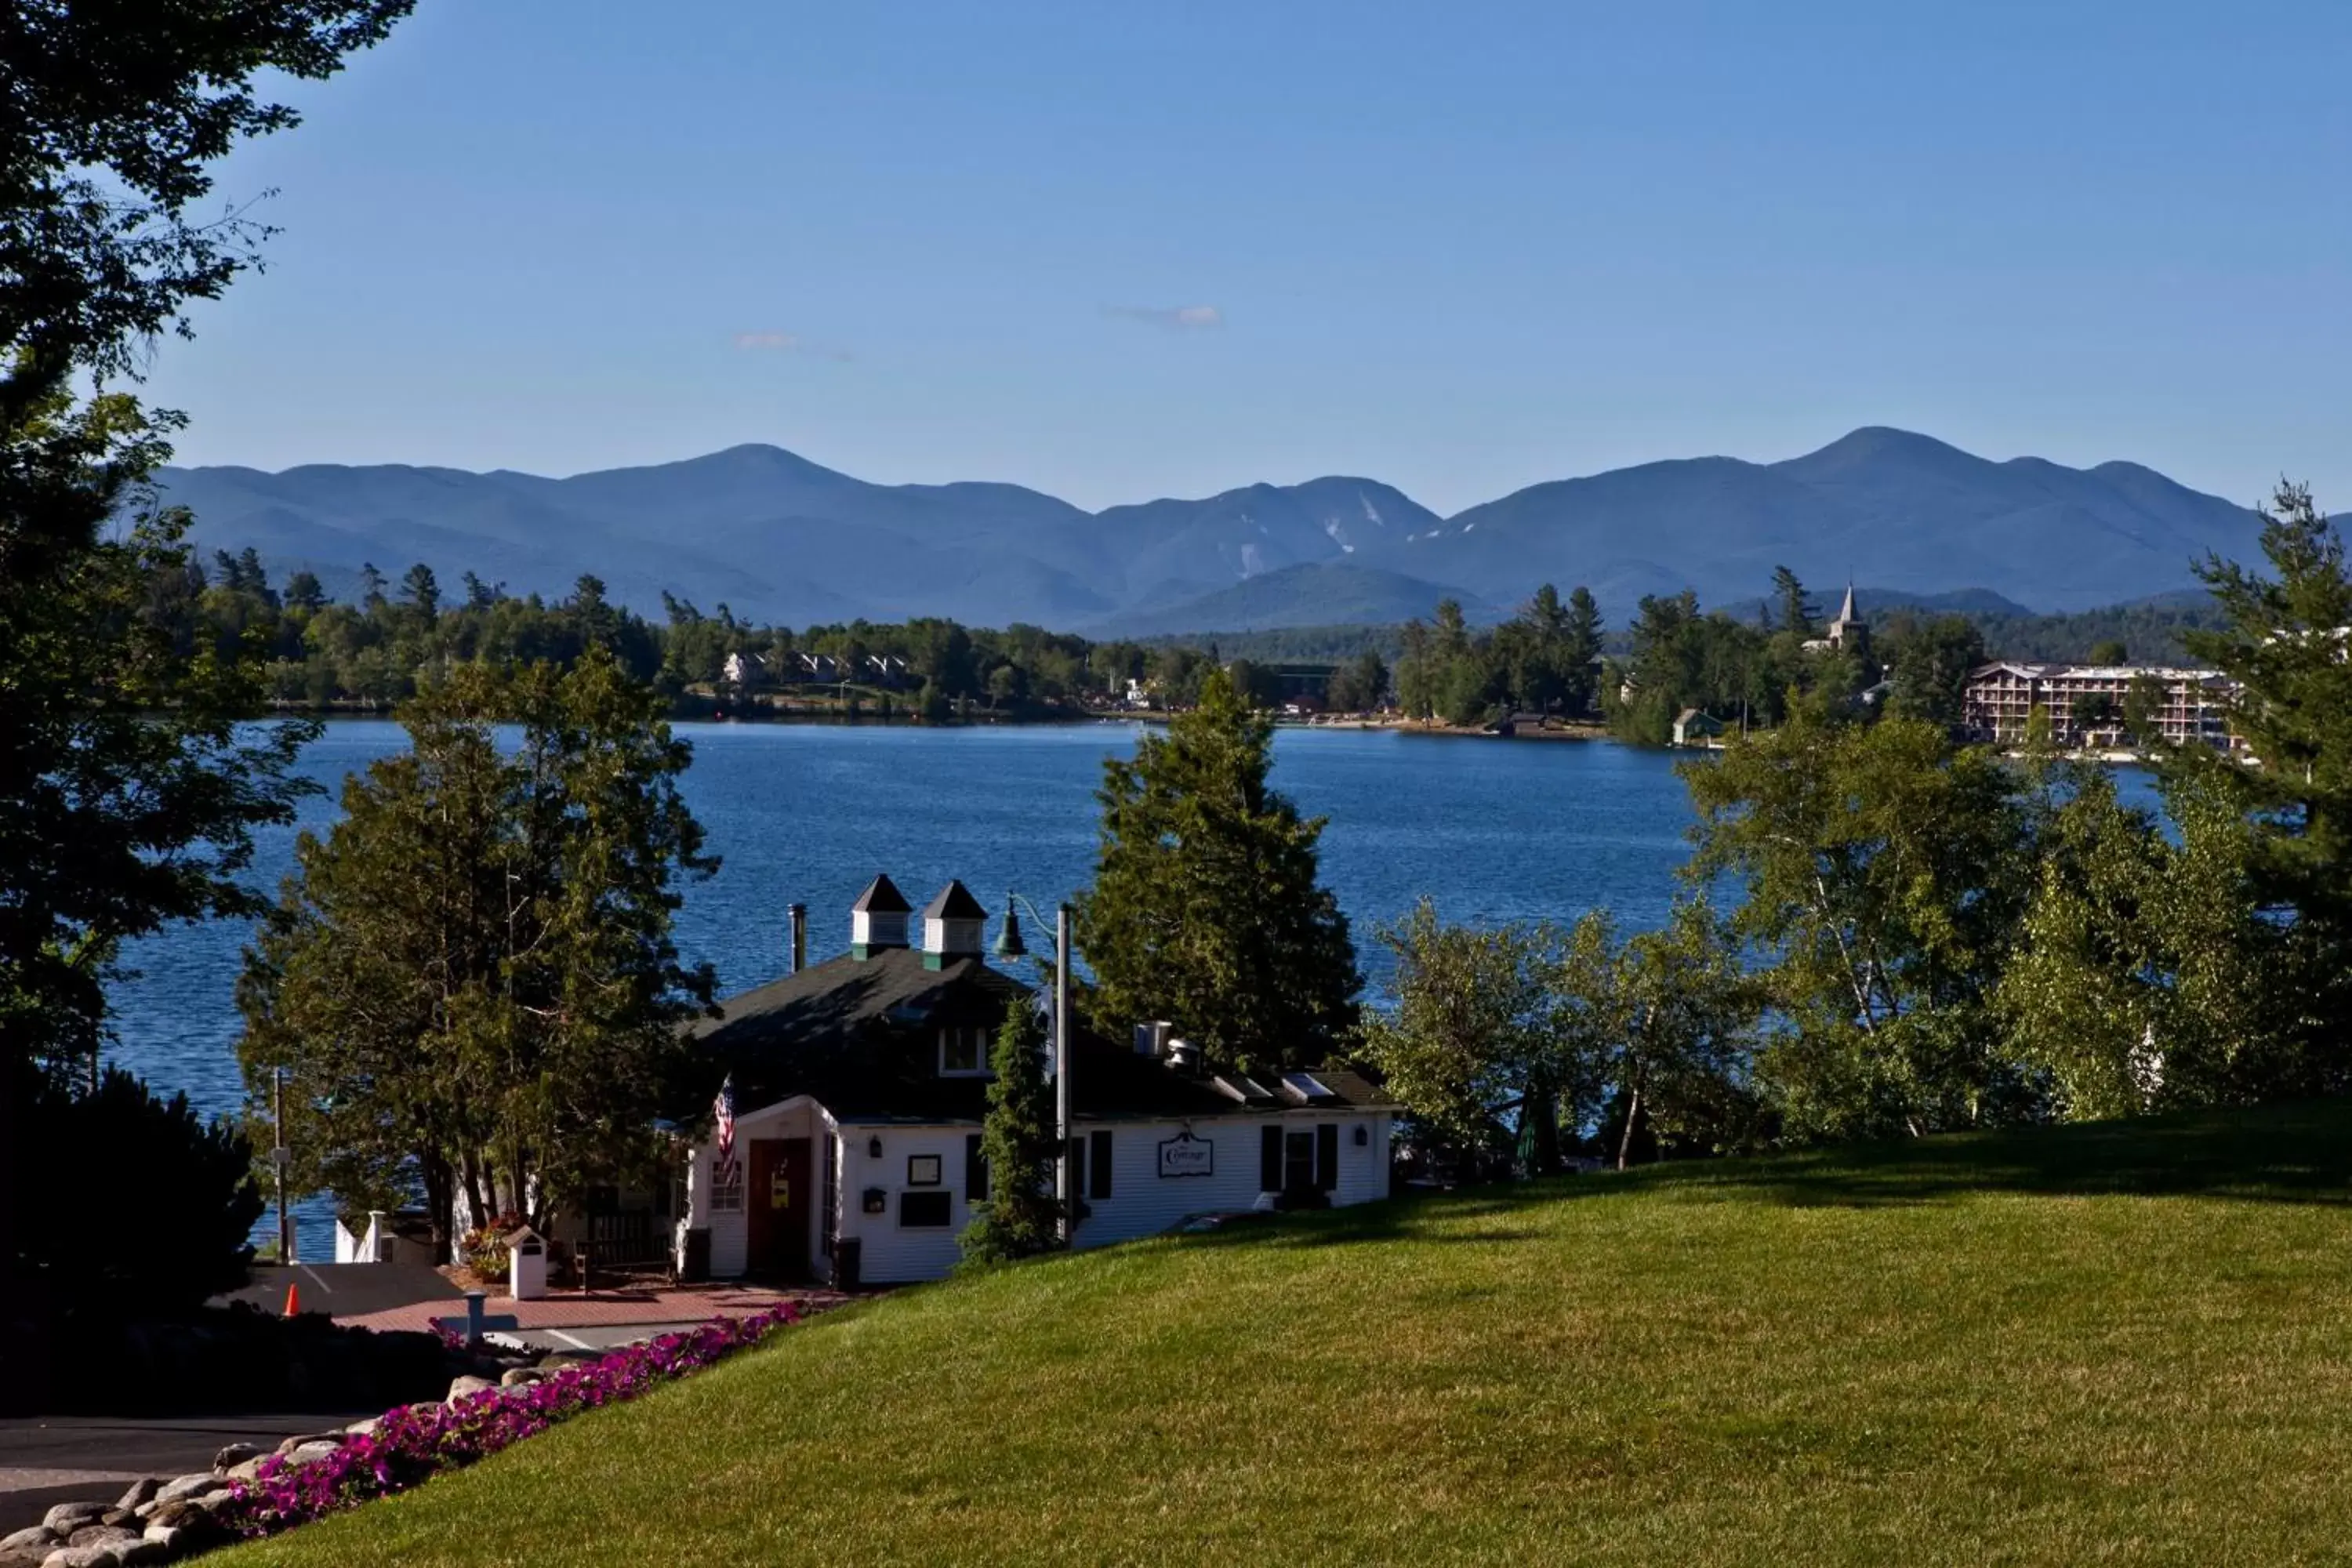 Spring in Mirror Lake Inn Resort and Spa